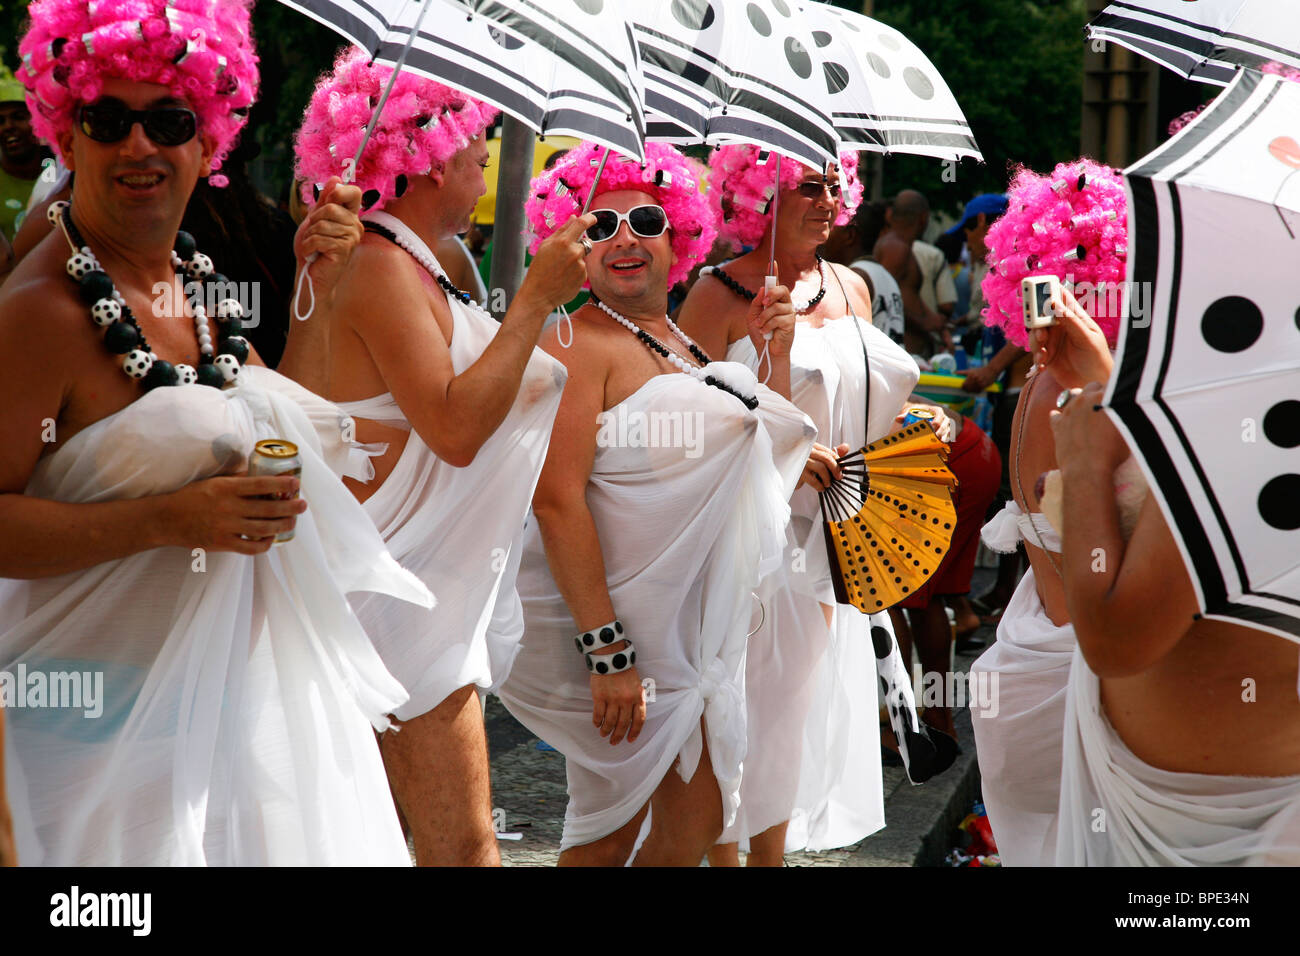 People celebrating Carnival at the streets, Rio de Janeiro, Brazil. Stock Photo